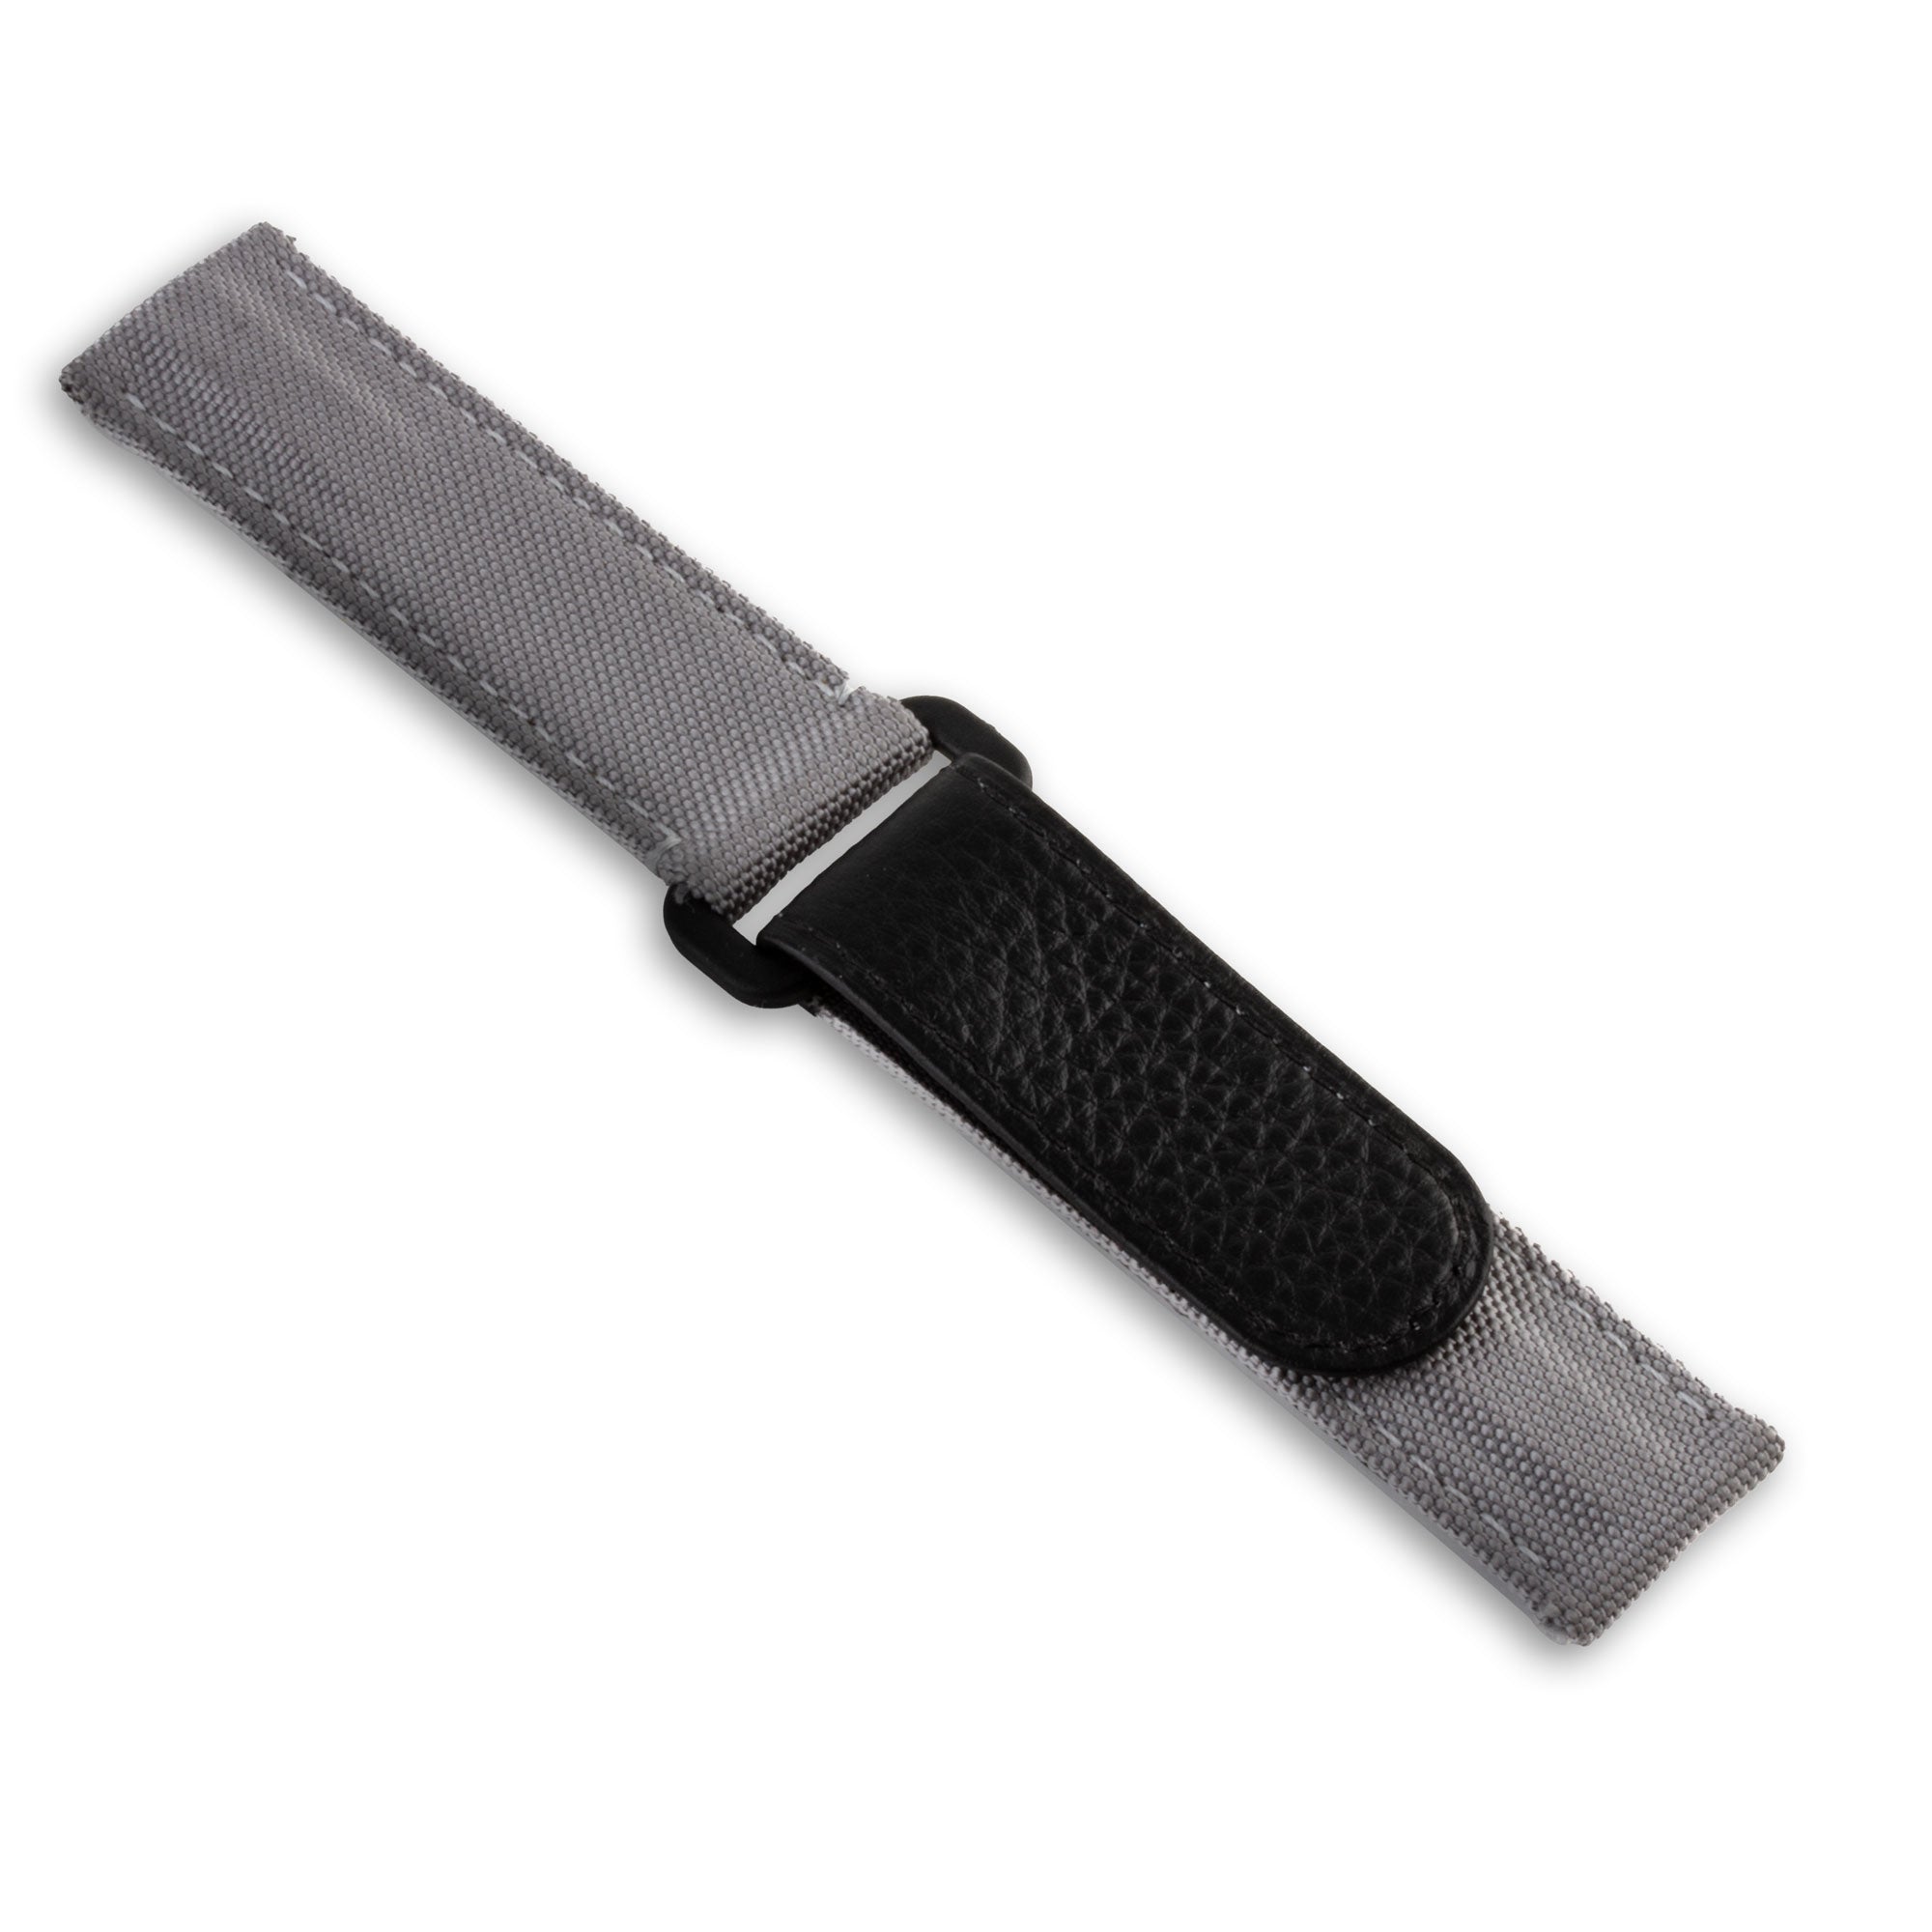 Velcro leather watch band - Cordura